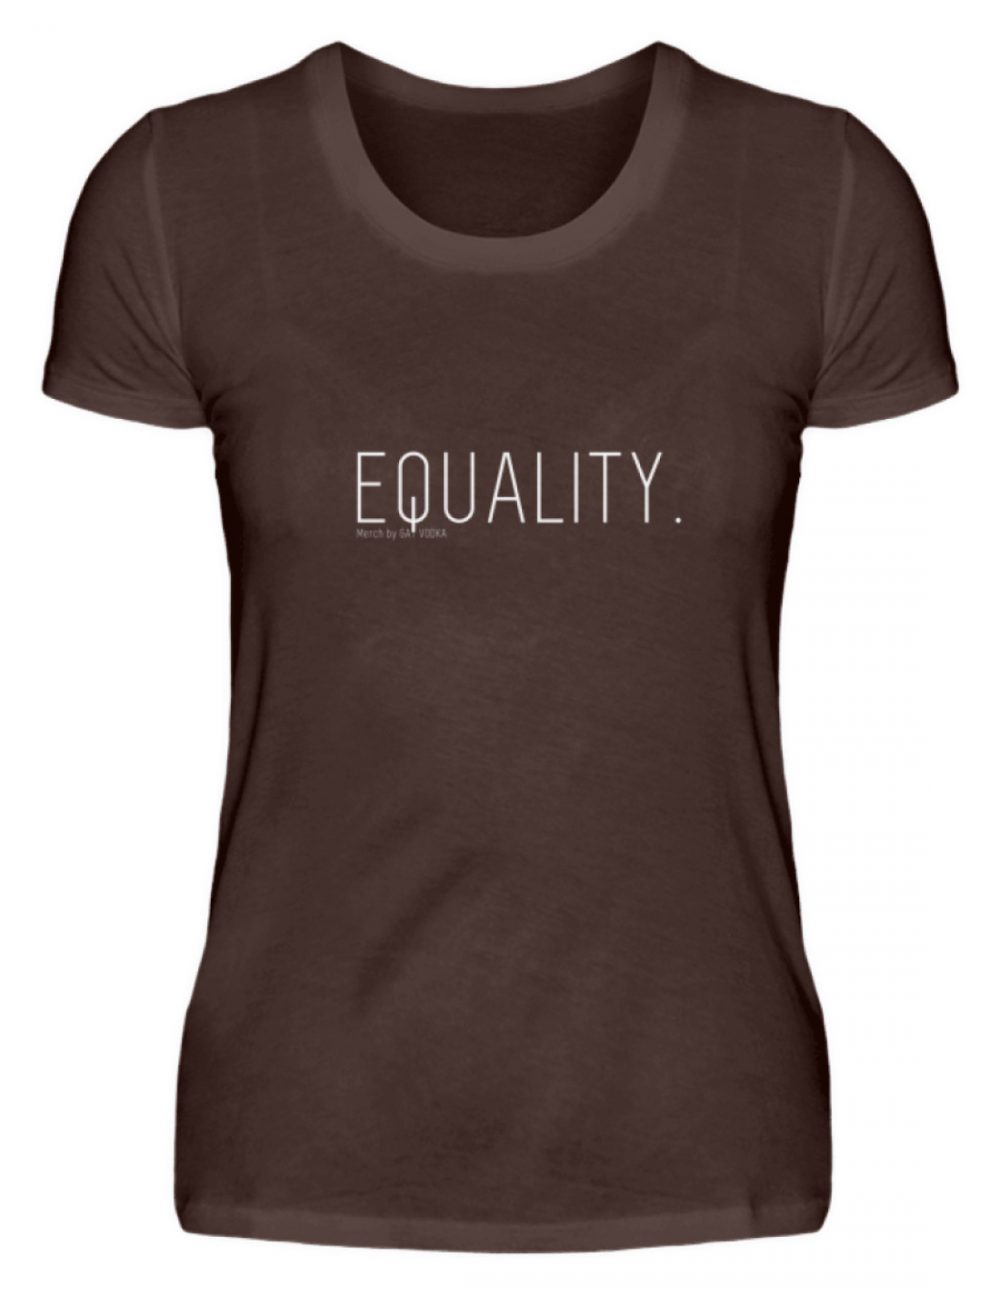 EQUALITY. - Damen Premiumshirt-1074